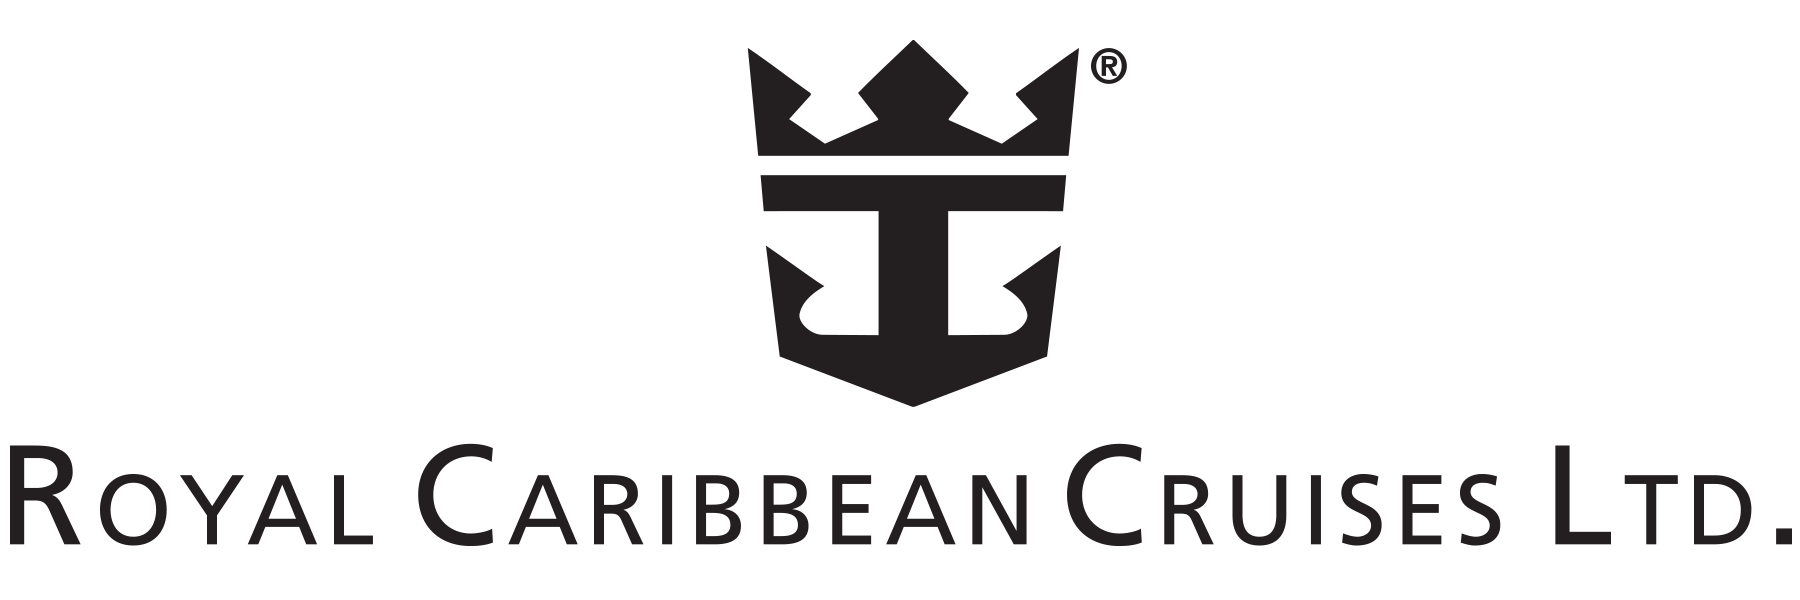 RCCL Logo - Royal Caribbean Cruises